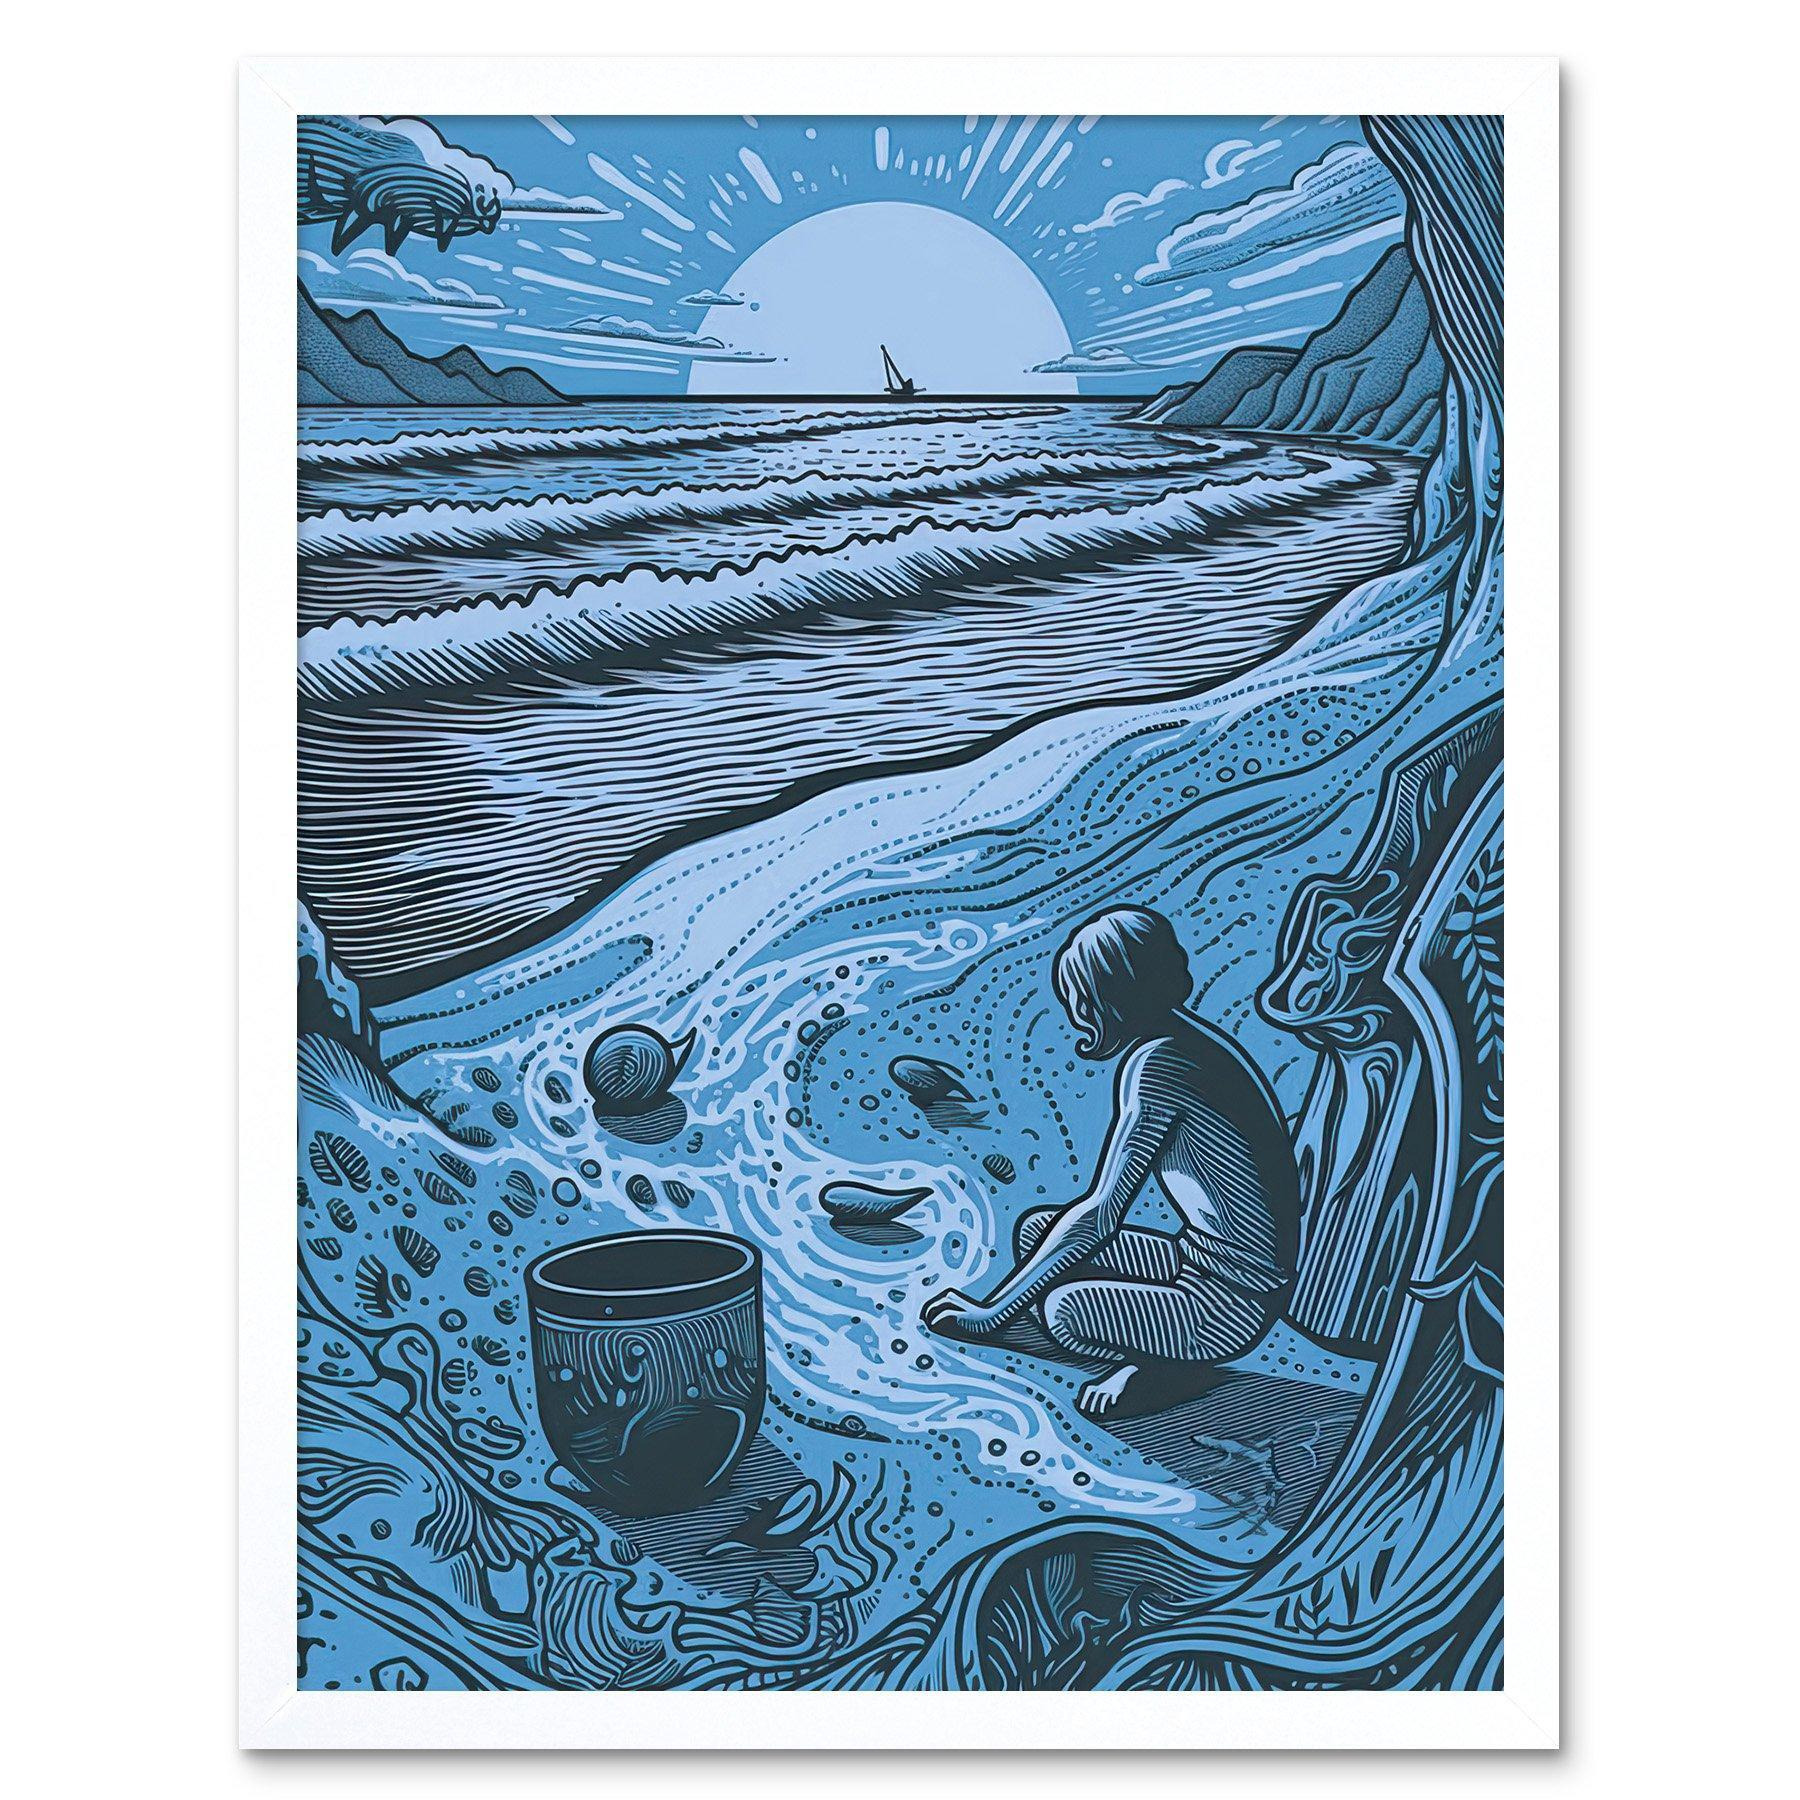 Beachcombing Coastal Landscape Blue Illustration Art Print Framed Poster Wall Decor 12x16 inch - image 1